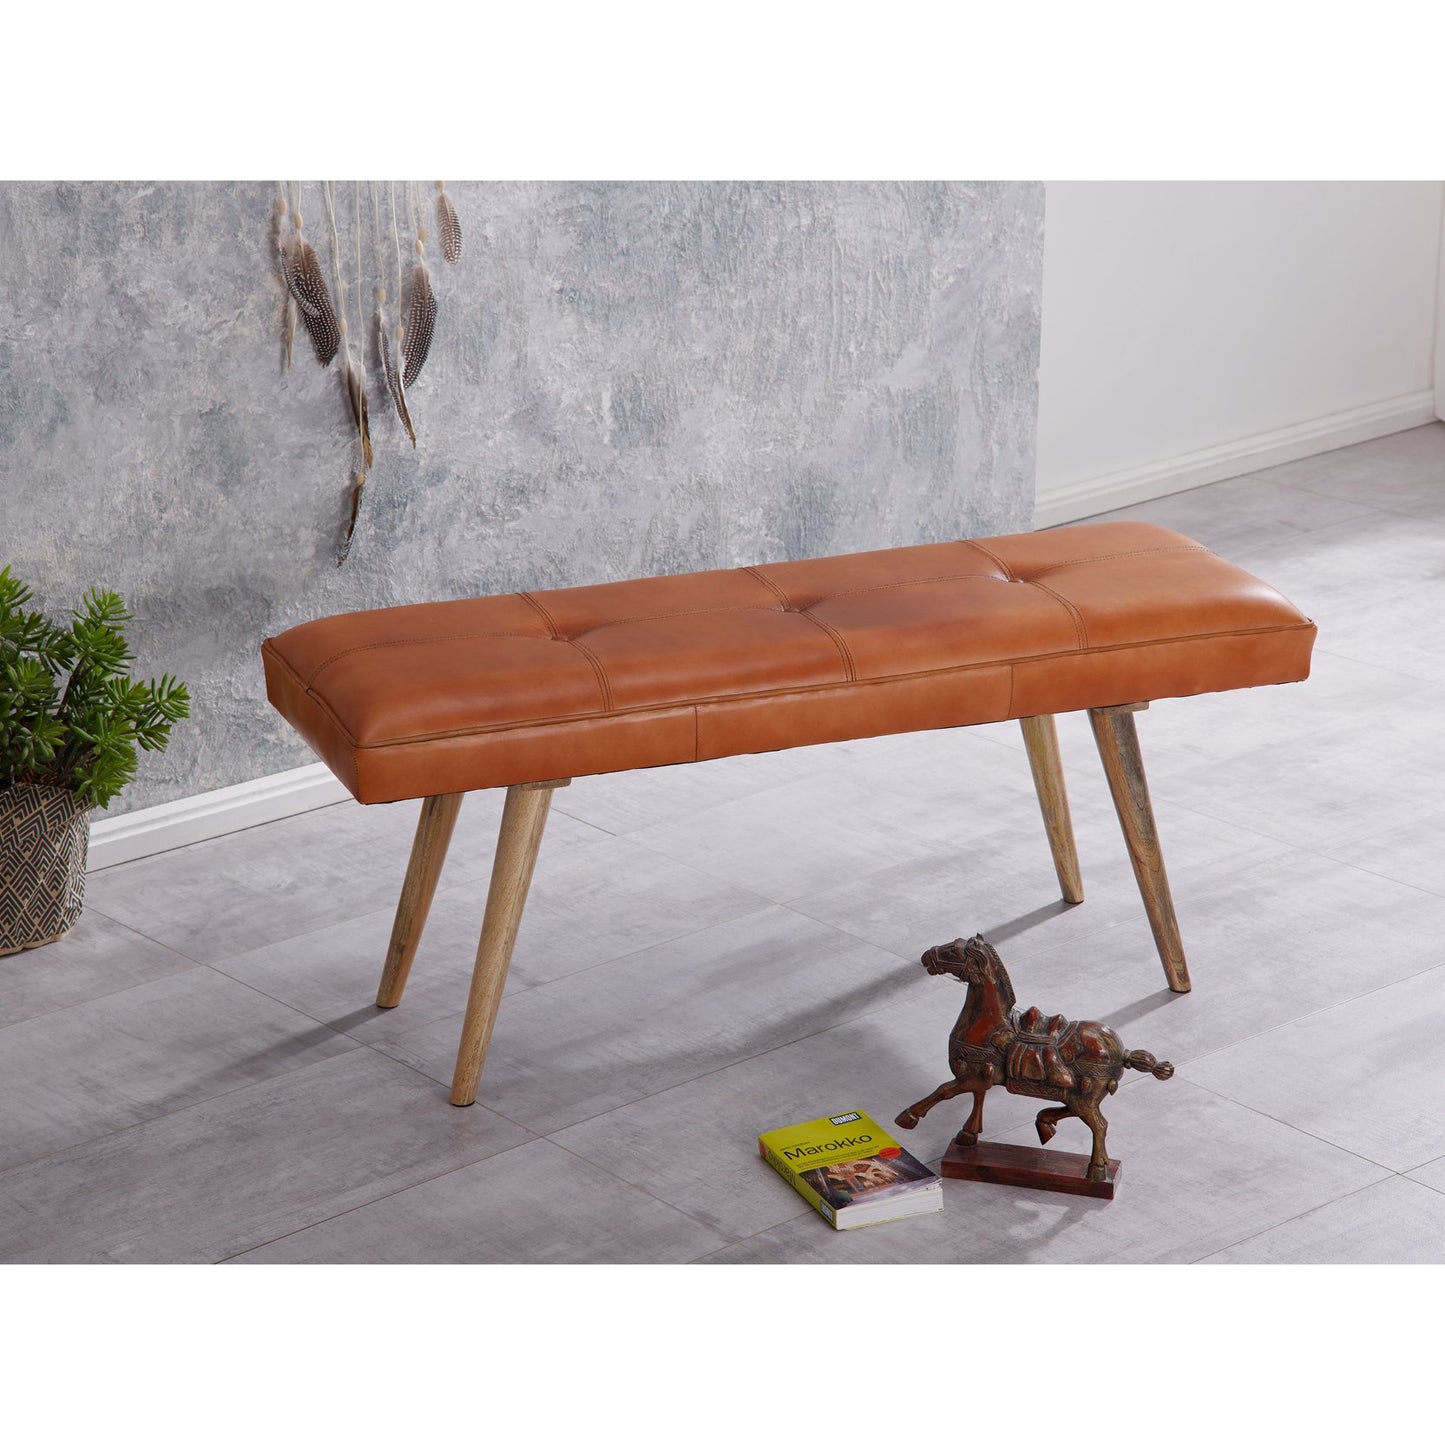 Nancy's Avenal Dining room bench - Hallway bench - Sofa - Upholstered bench - Solid wood - Mango wood - Goatskin - 117 x 38 x 51 cm